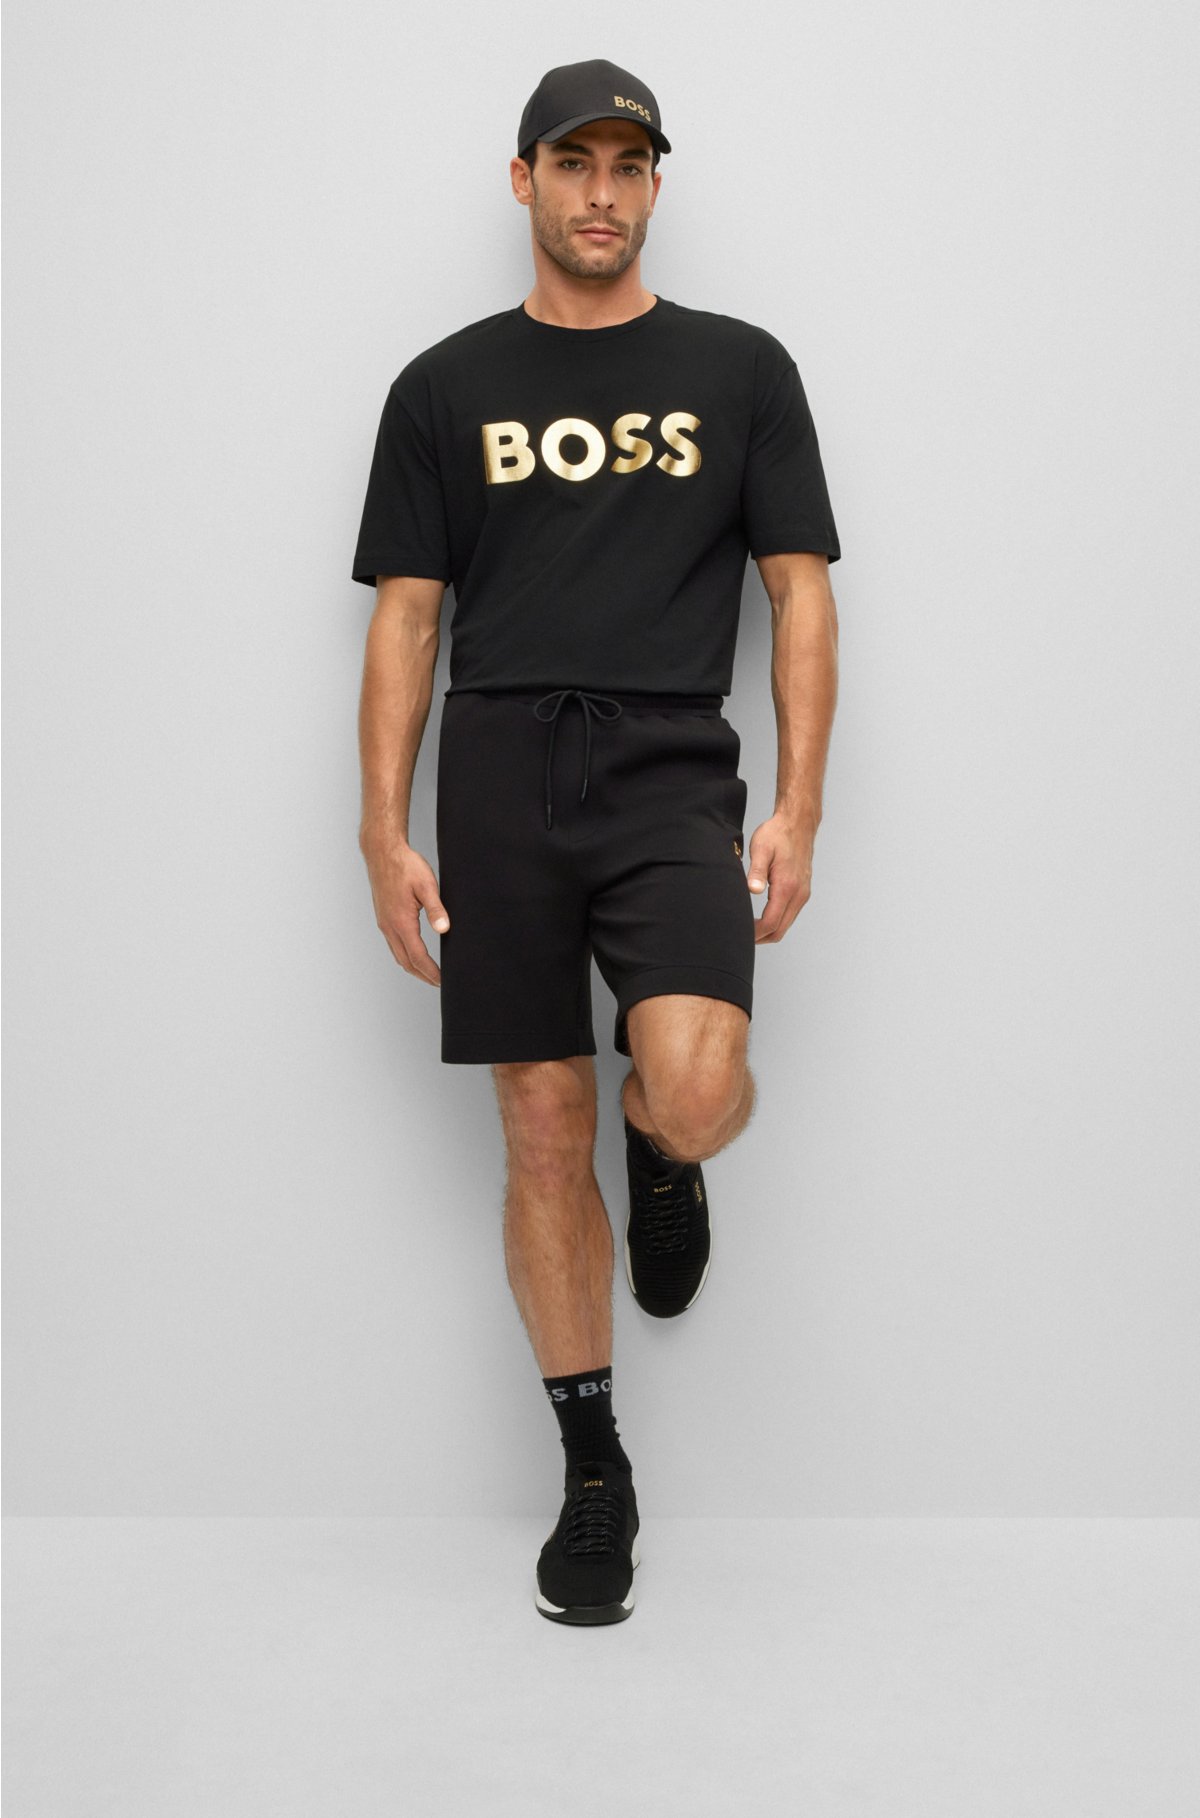 BOSS - Cotton-jersey with T-shirt print crew-neck logo